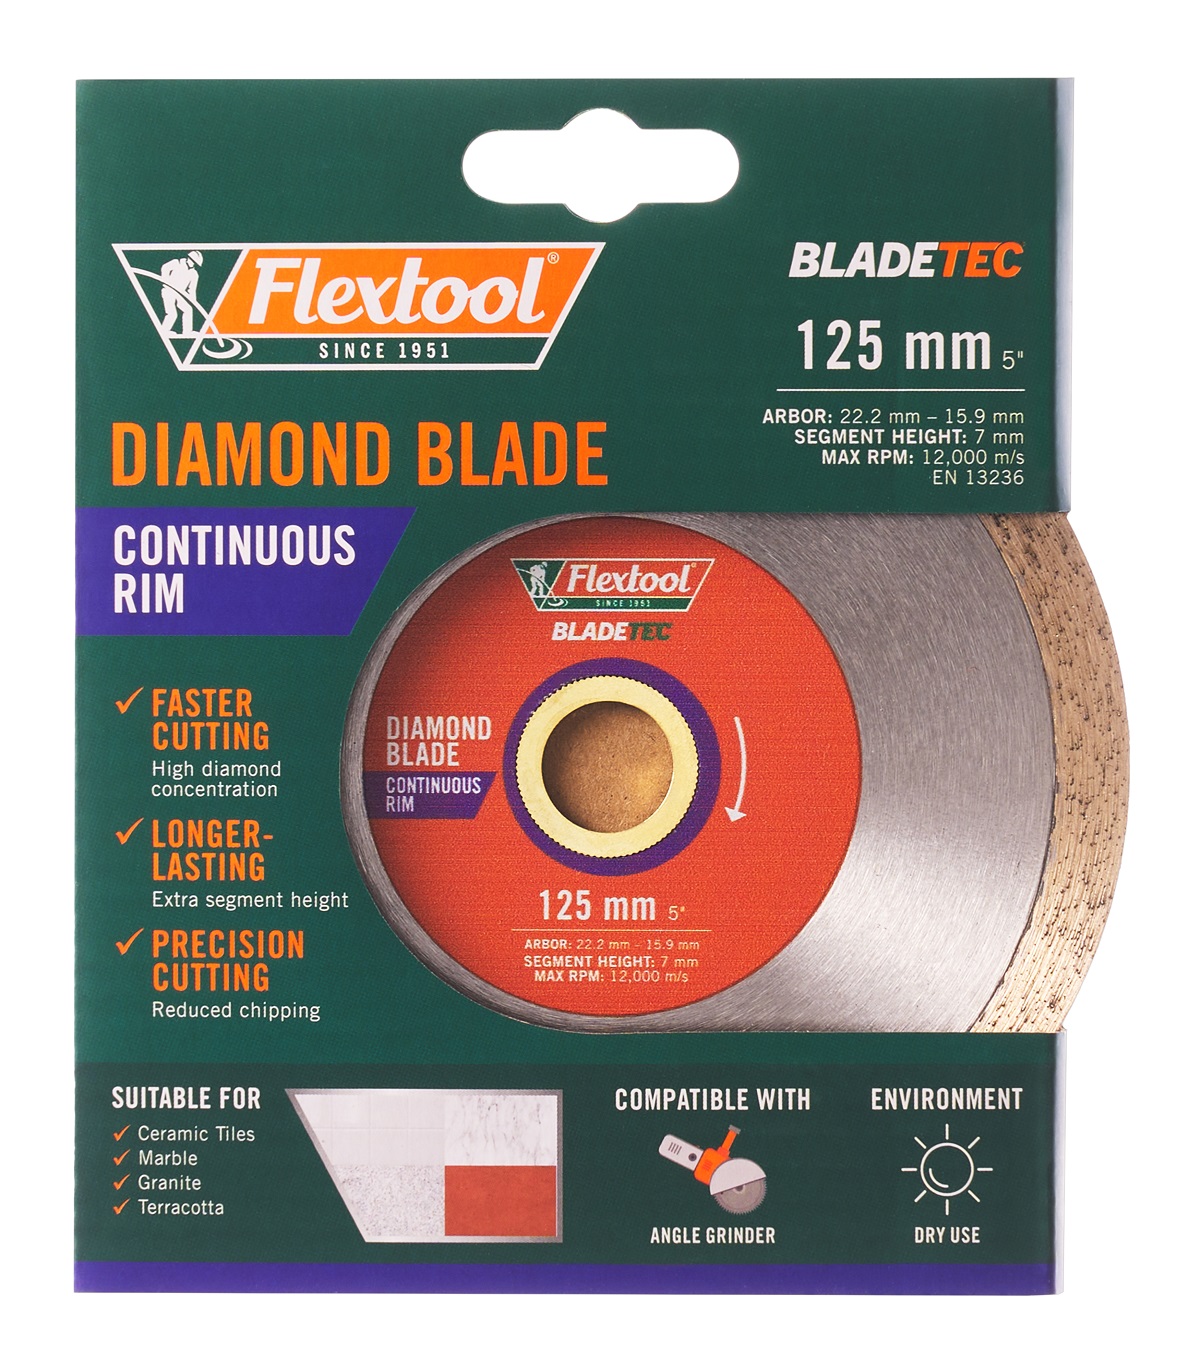 BladeTec Diamond Blade Concrete — Flextool